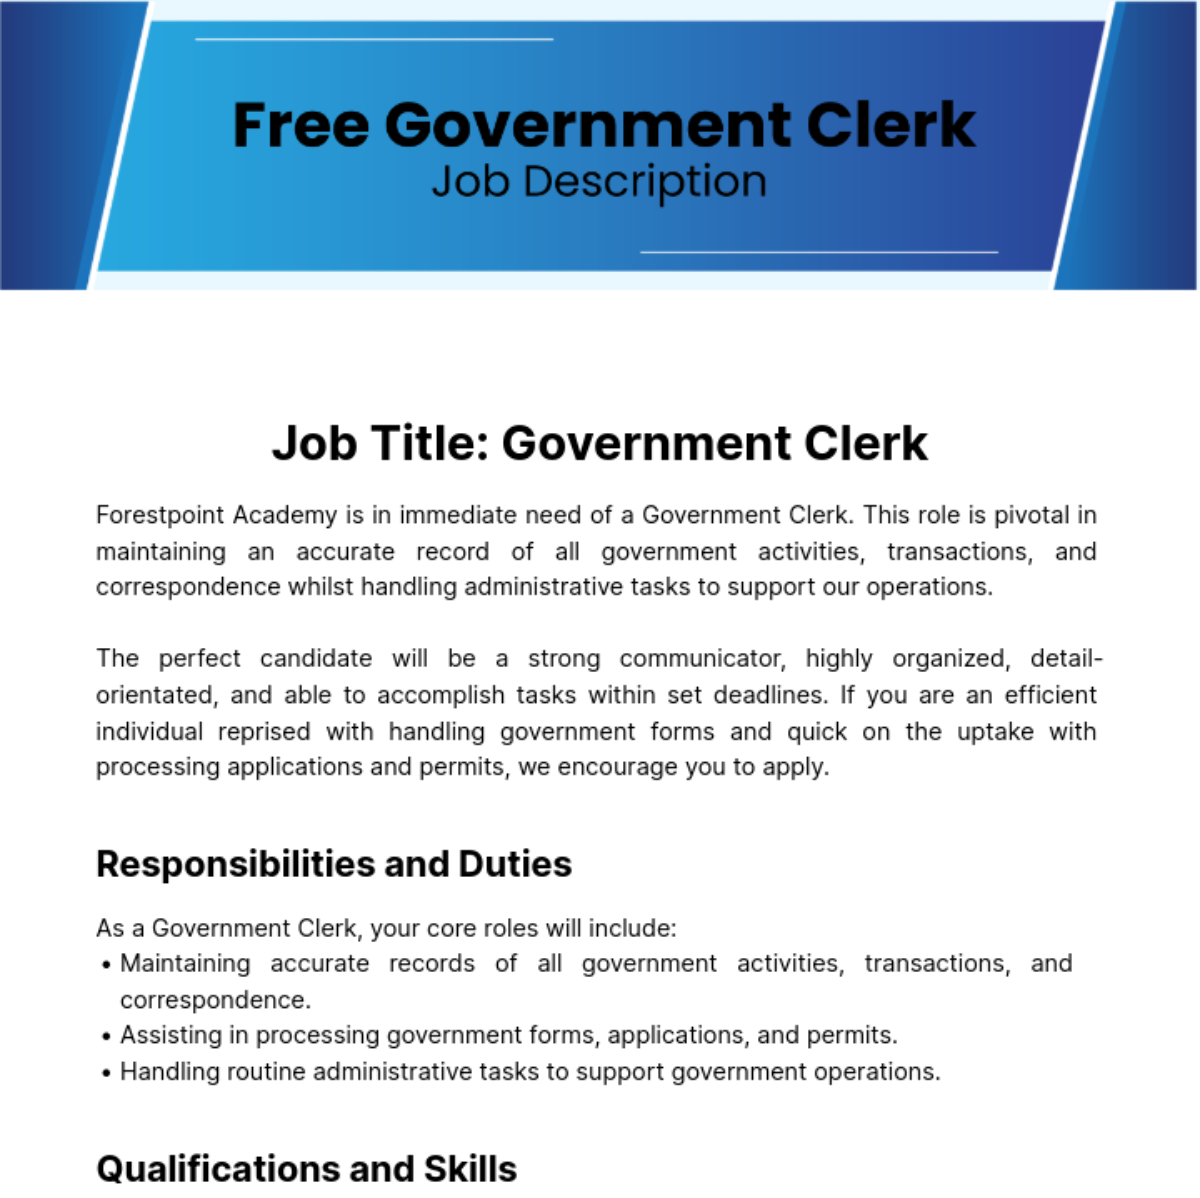 Free Government Clerk Job Description Template